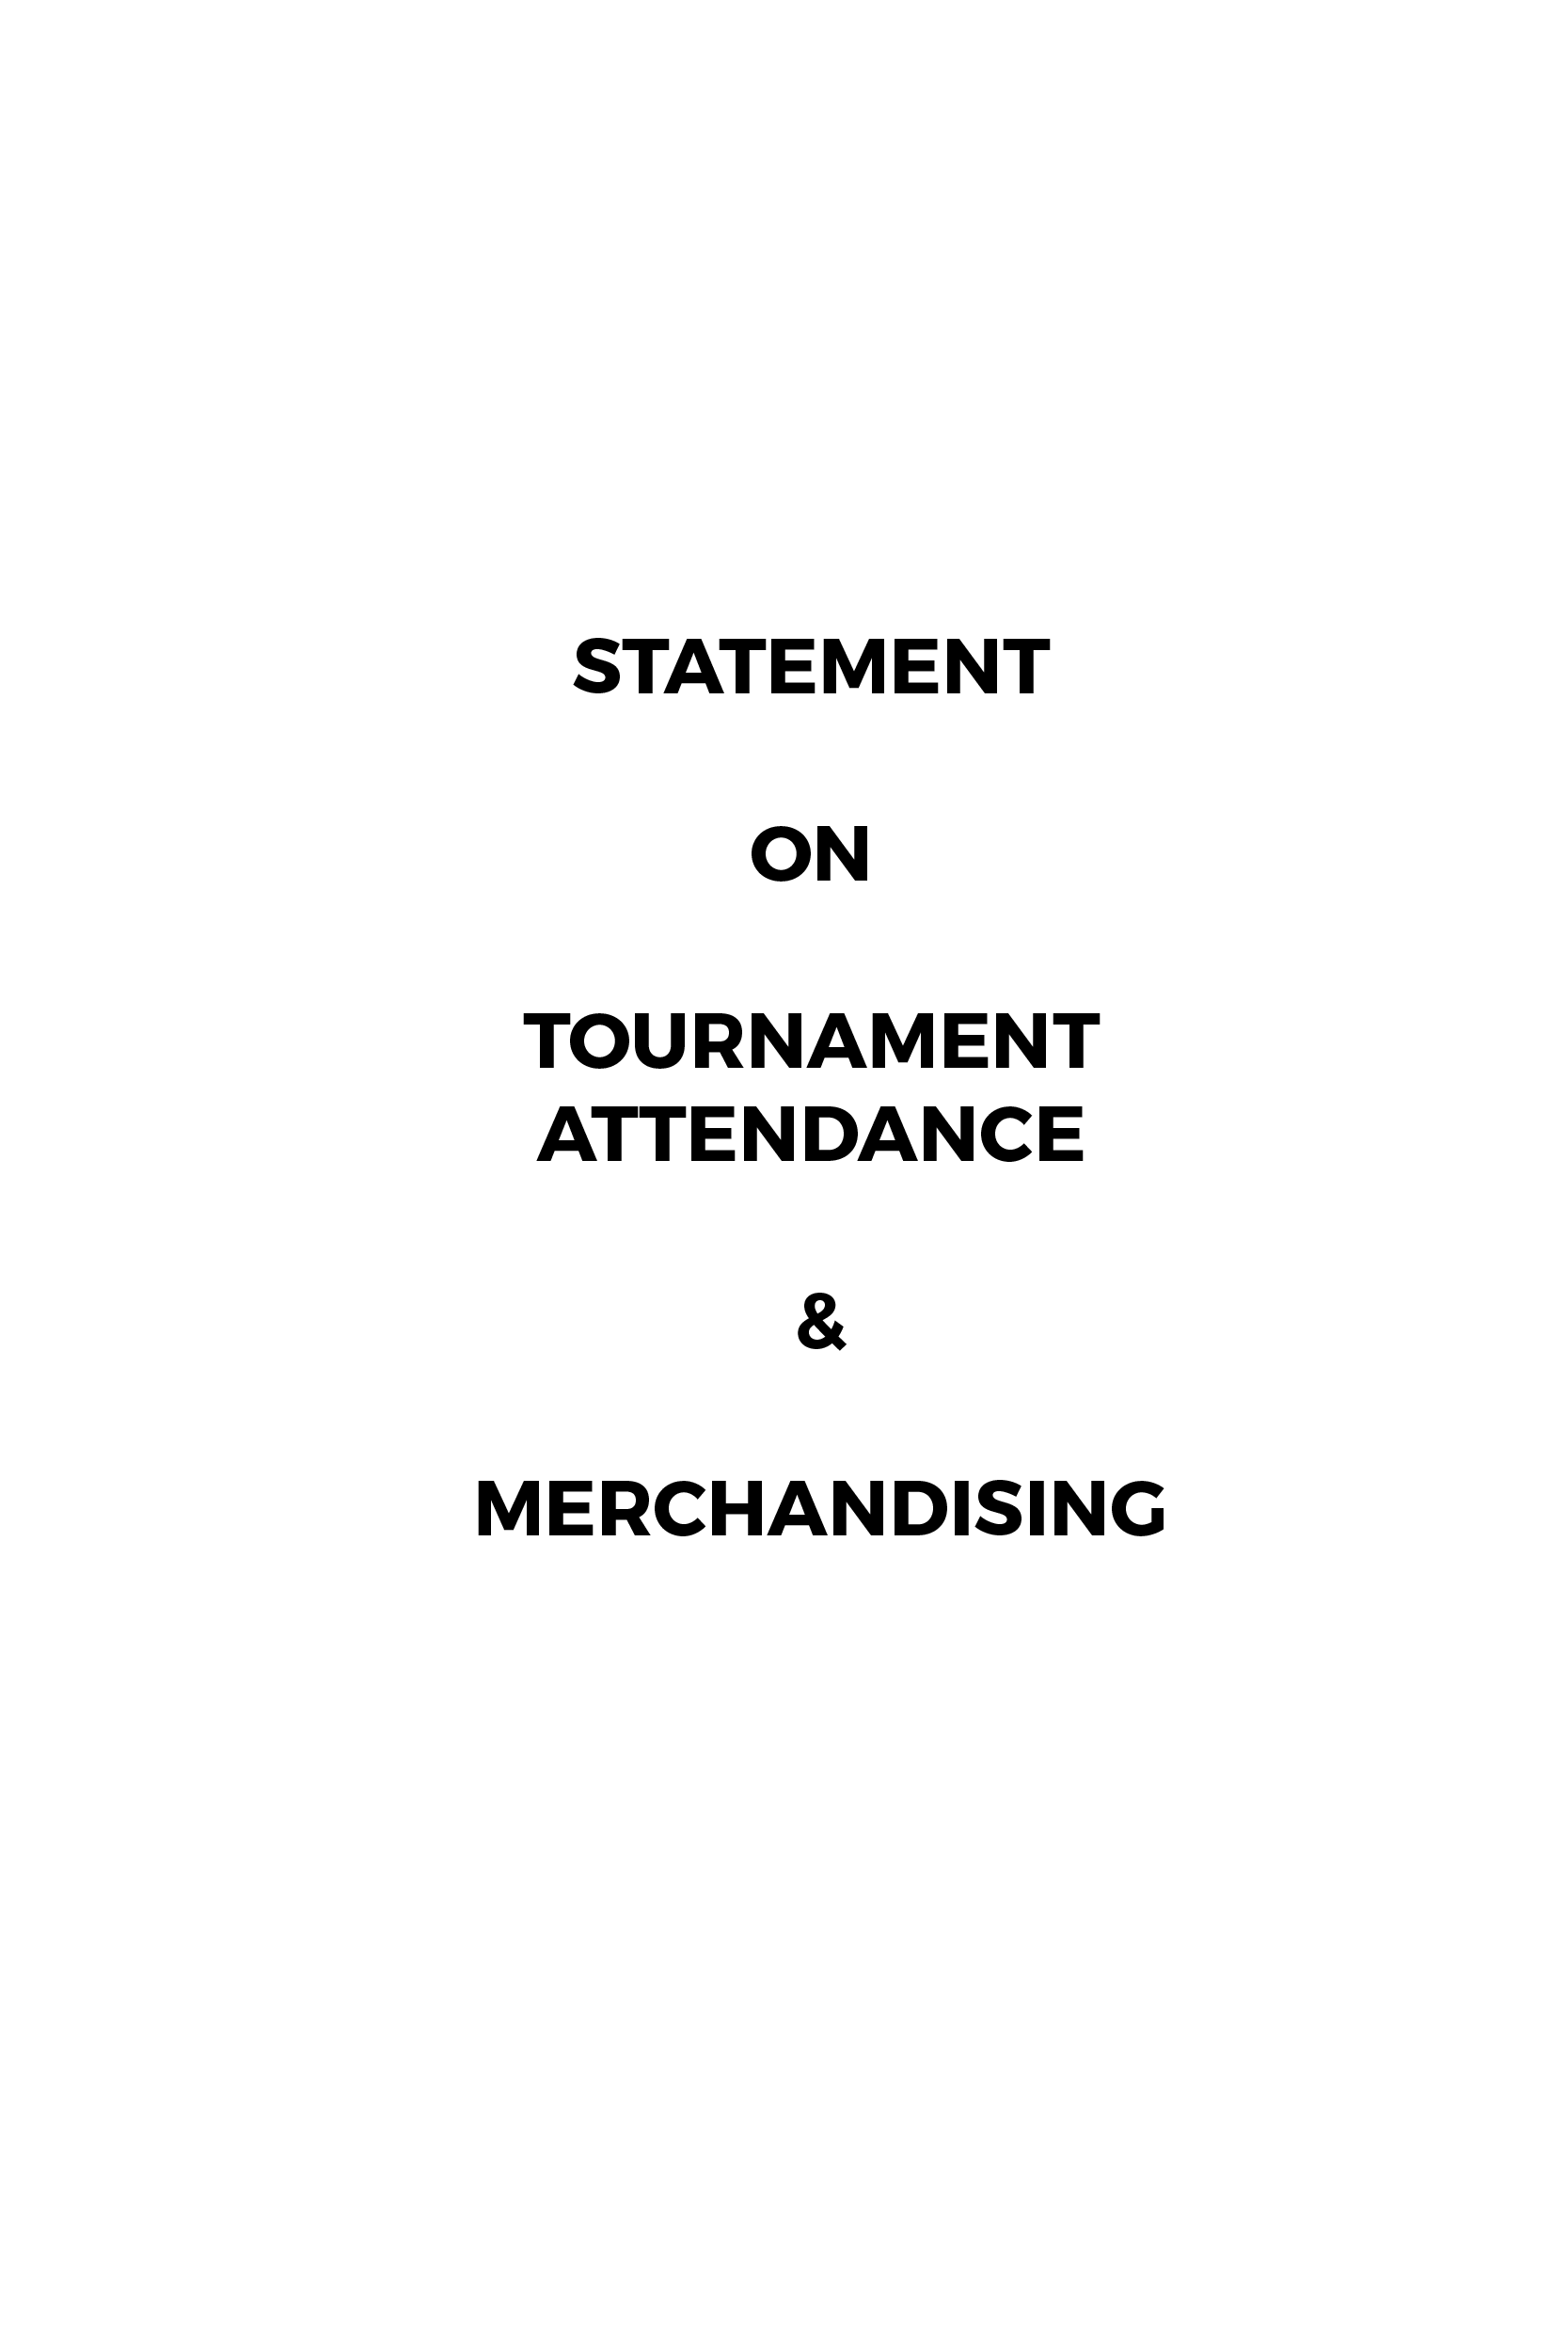 Statement on tournament attendance and merchandising